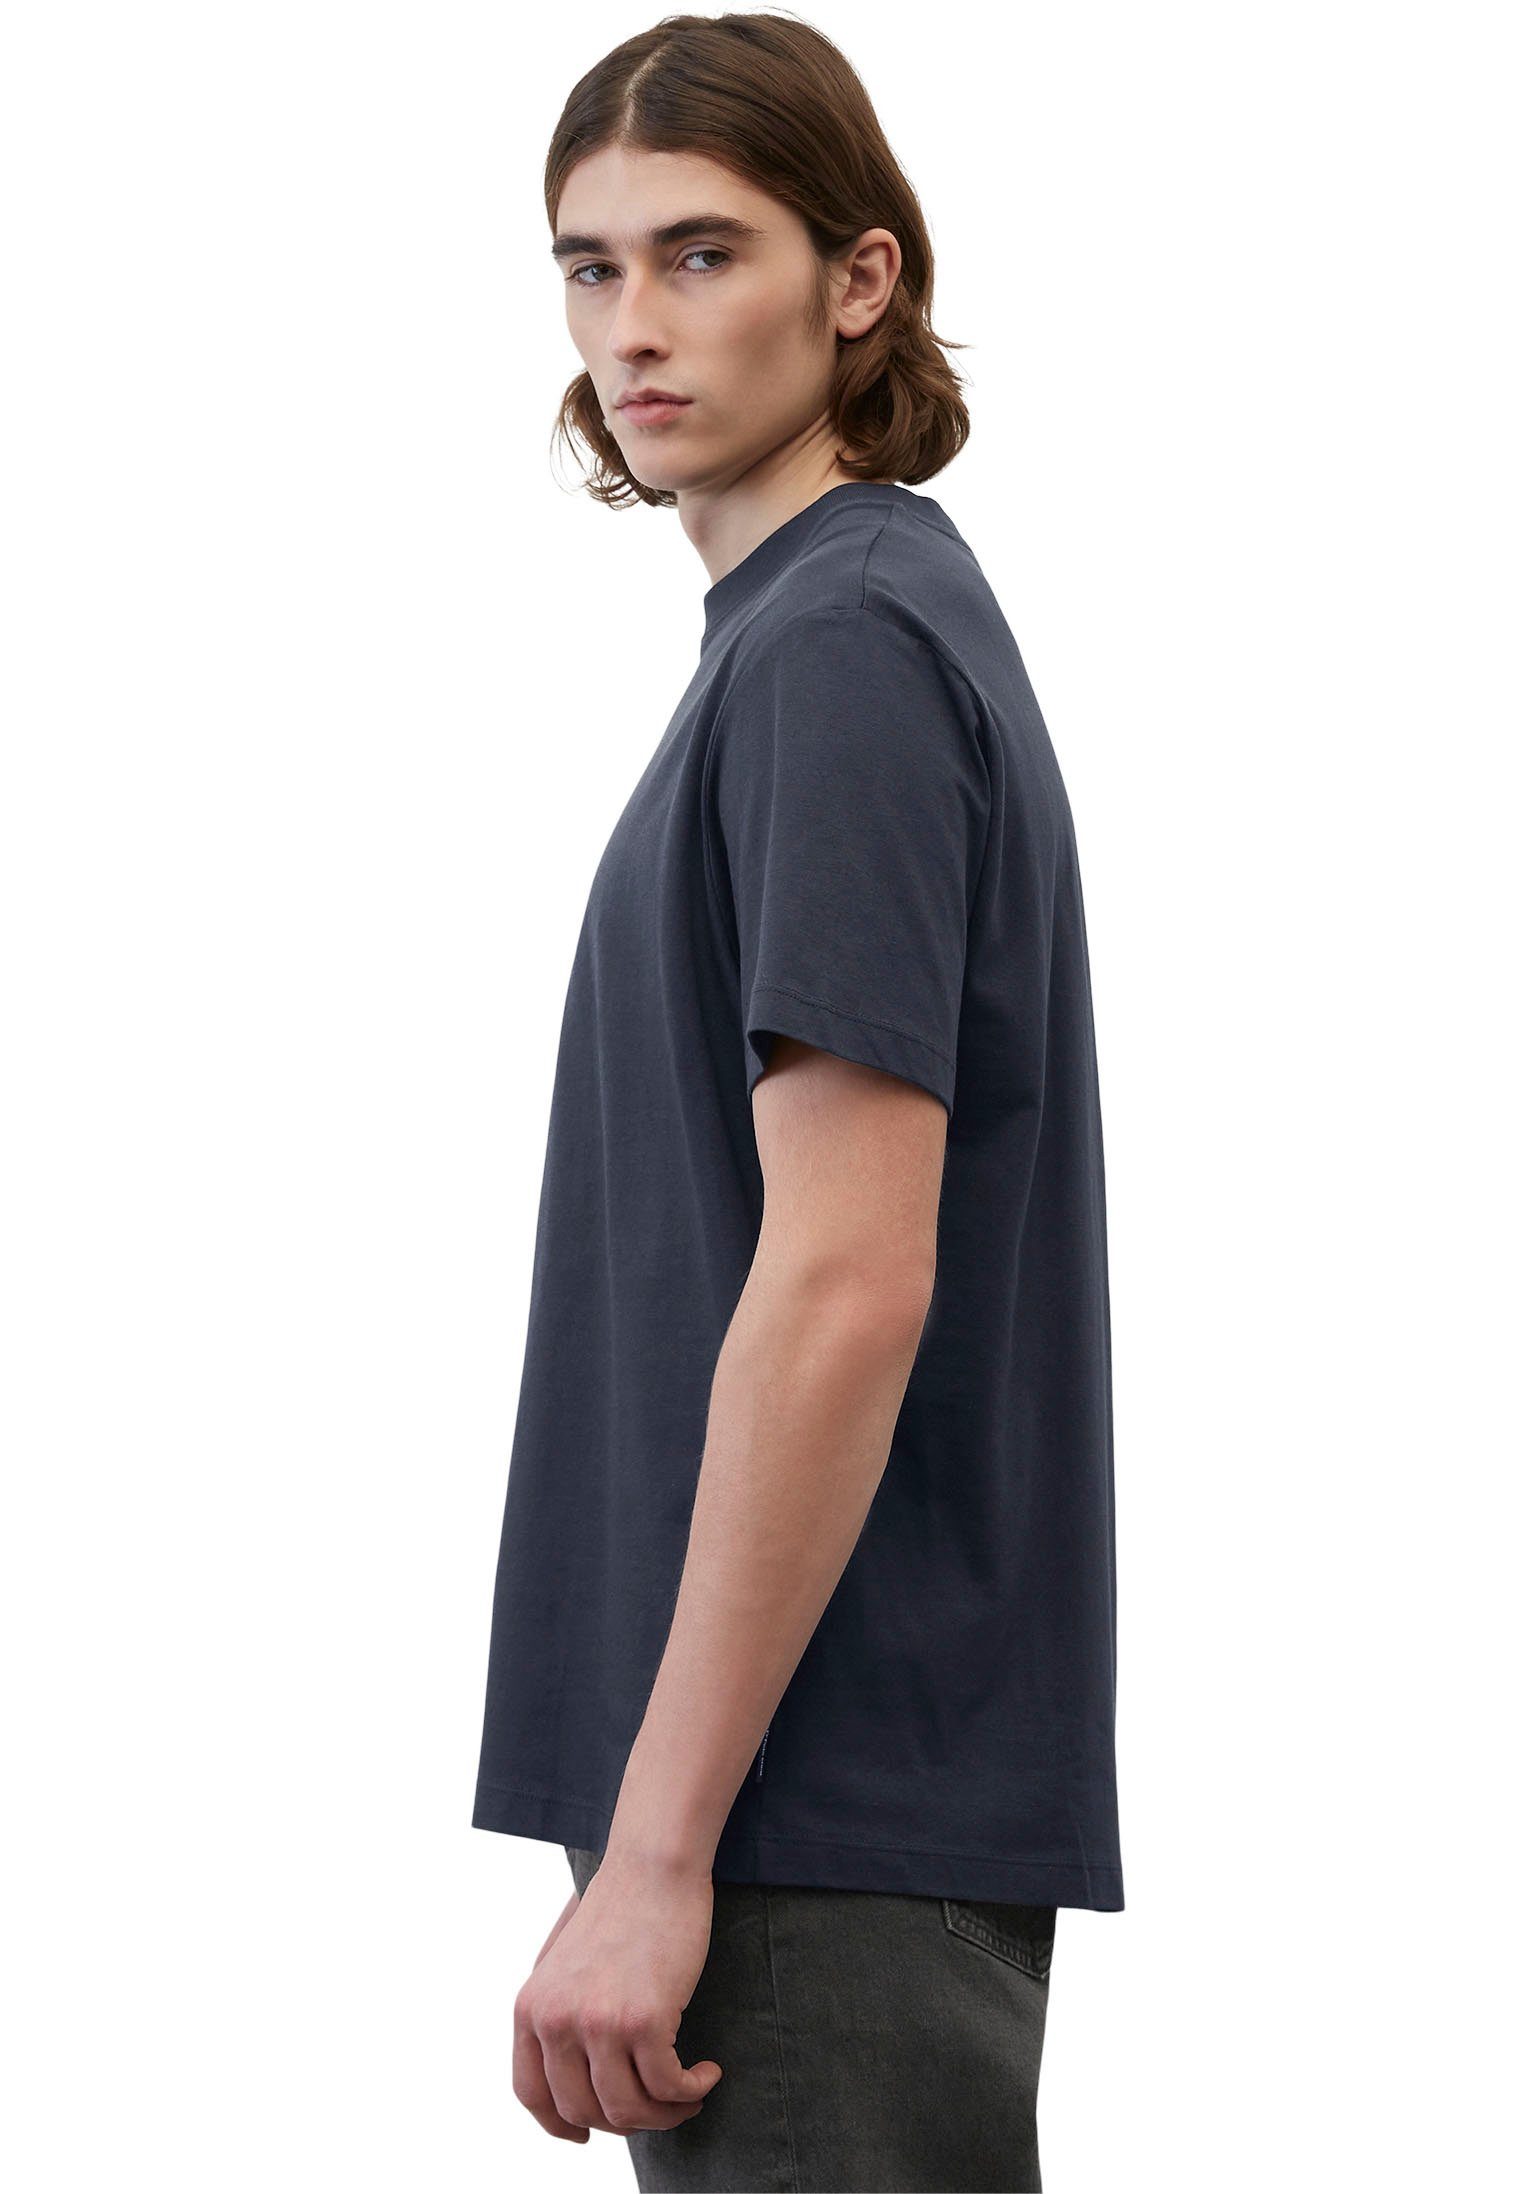 dunkelblau DENIM mit Labeling Marc T-Shirt mittig vorne O'Polo